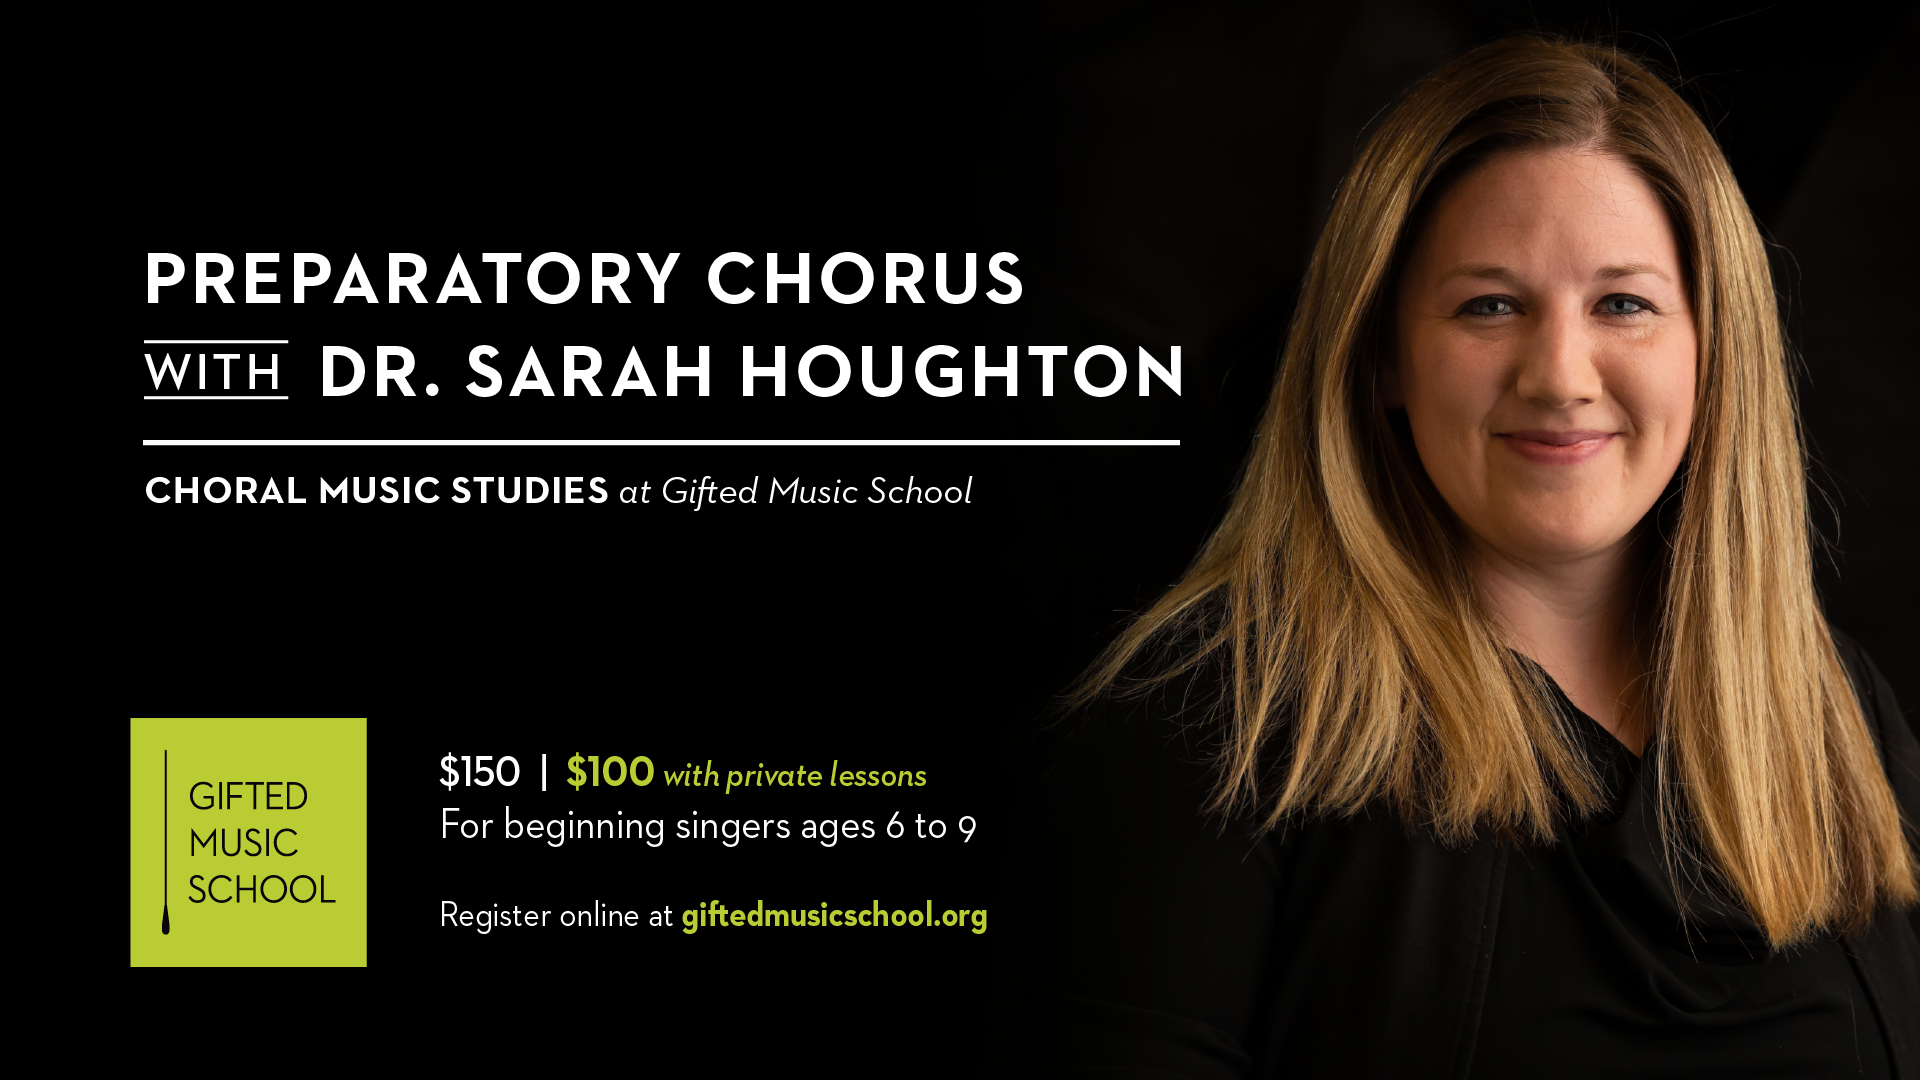 Gifted Music School Preparatory Chorus Choir Class Advertisement with Voice Teacher Dr. Sarah Houghton